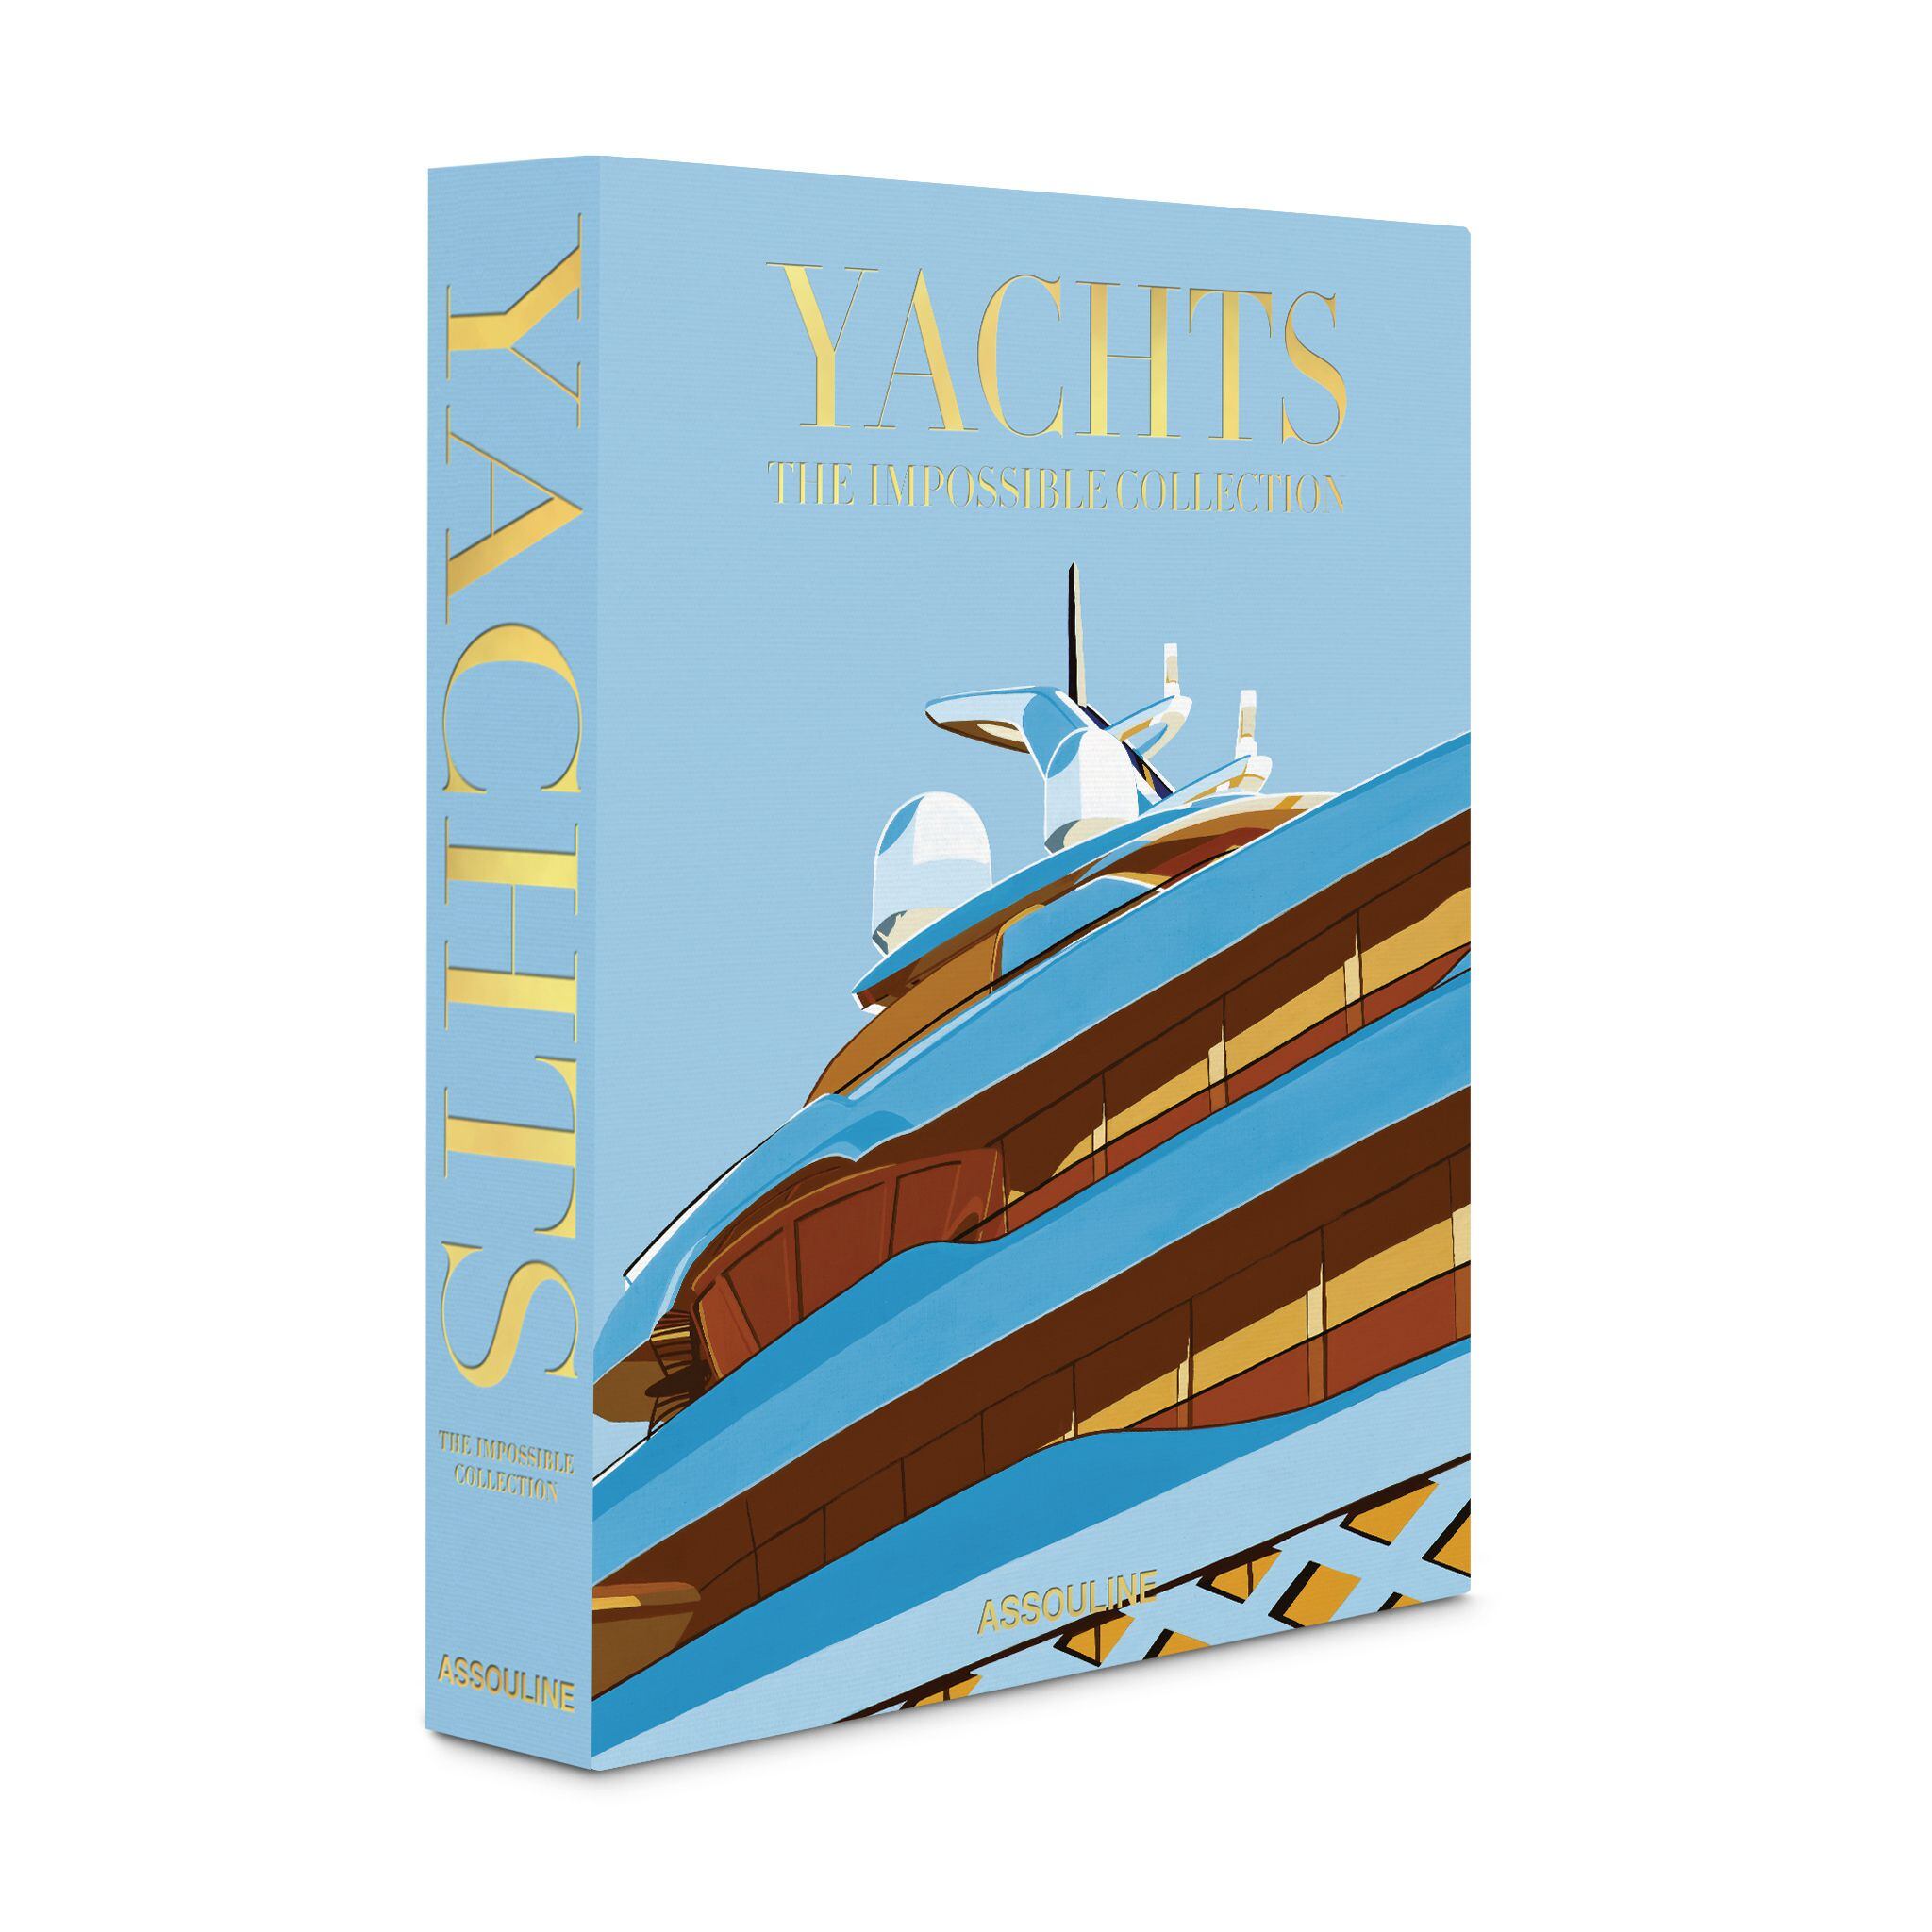 Cubierta del libro 'Yachts: The Impossible Collection', de Assouline.